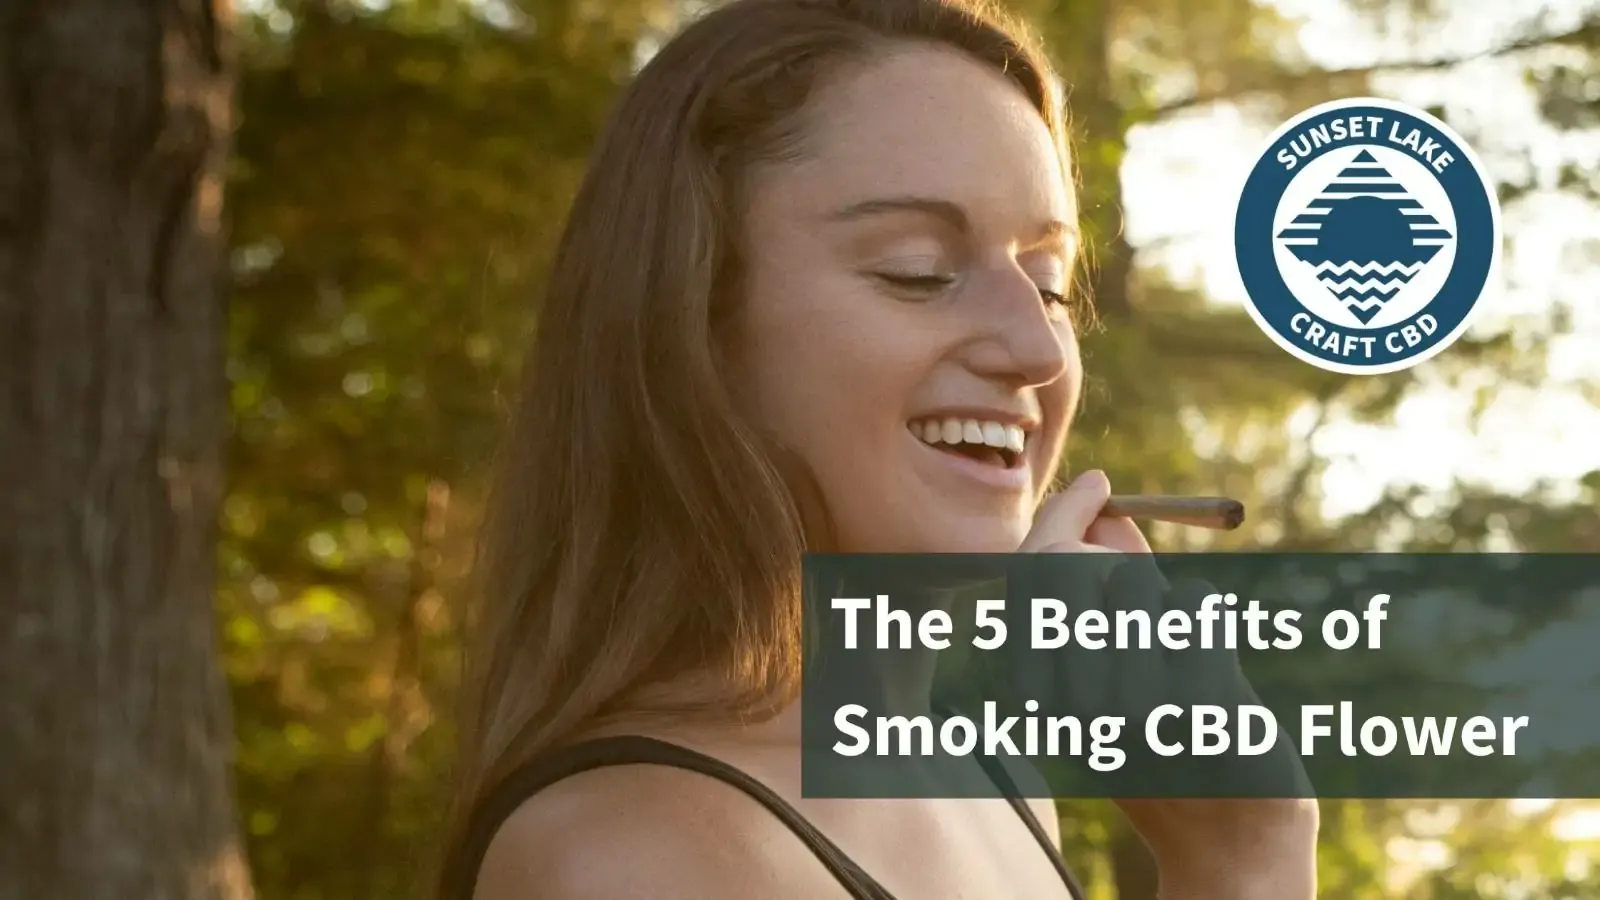 A woman smoking CBD. Text reads "The 5 Benefits of Smoking CBD Flower"